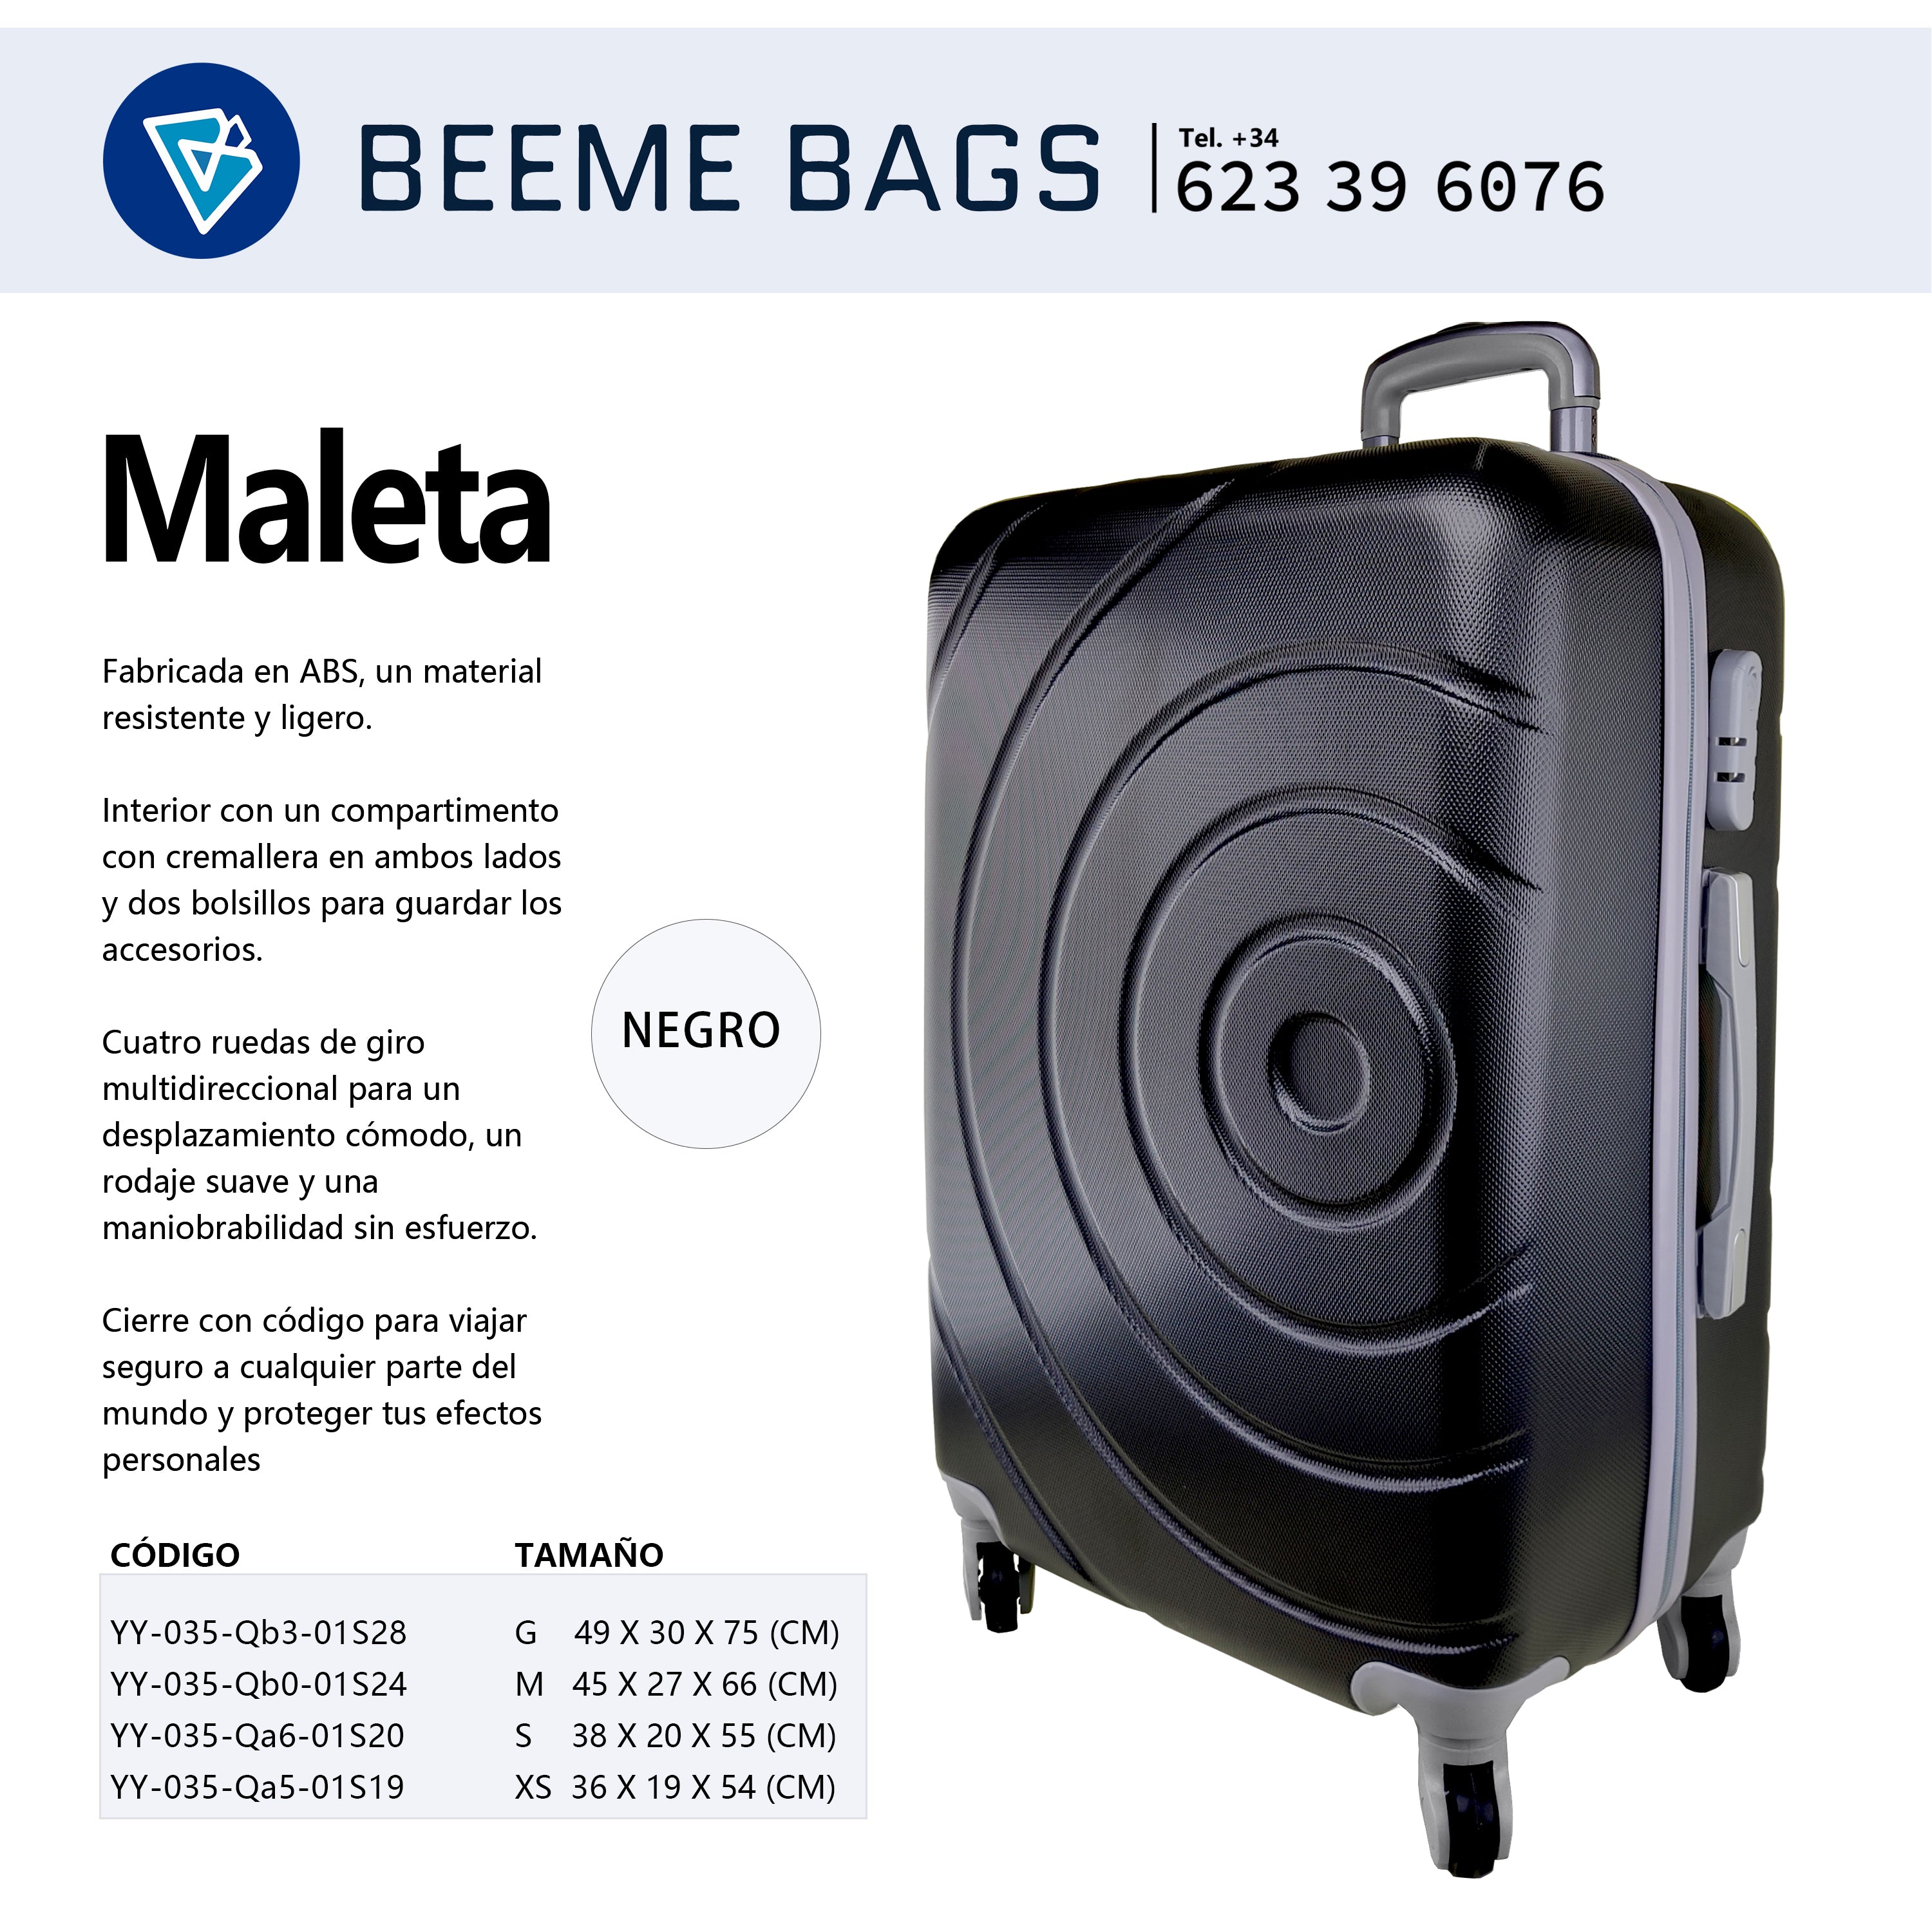 Maleta 24inch(≈45 x 27 66 cm) 18-22kg Beeme bags